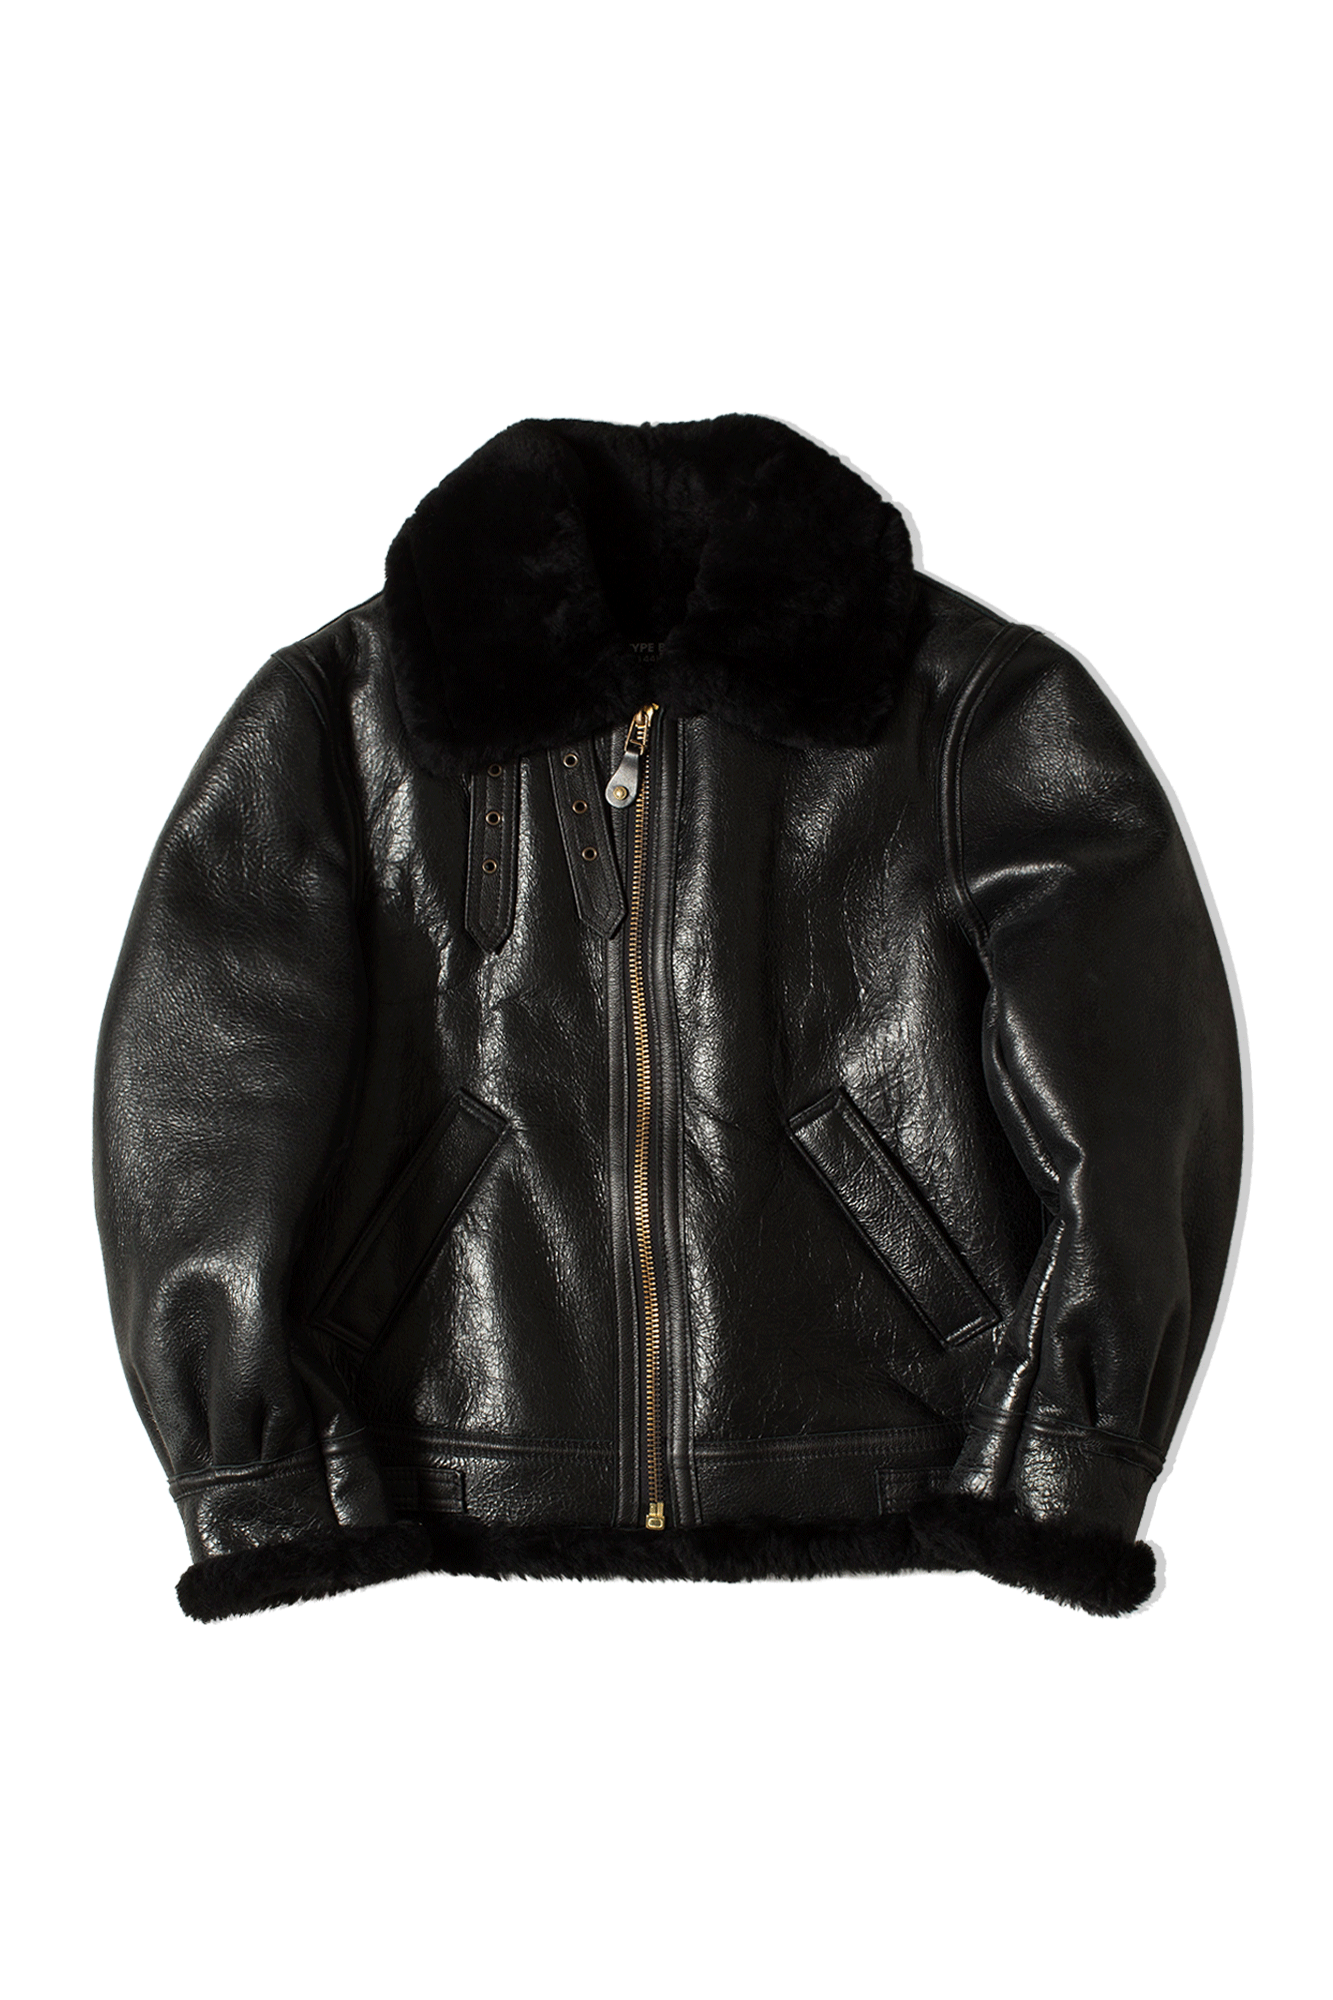 Schott Leather jackets 257S Black 257SBLACK#000#BLACK#36 - One Block Down